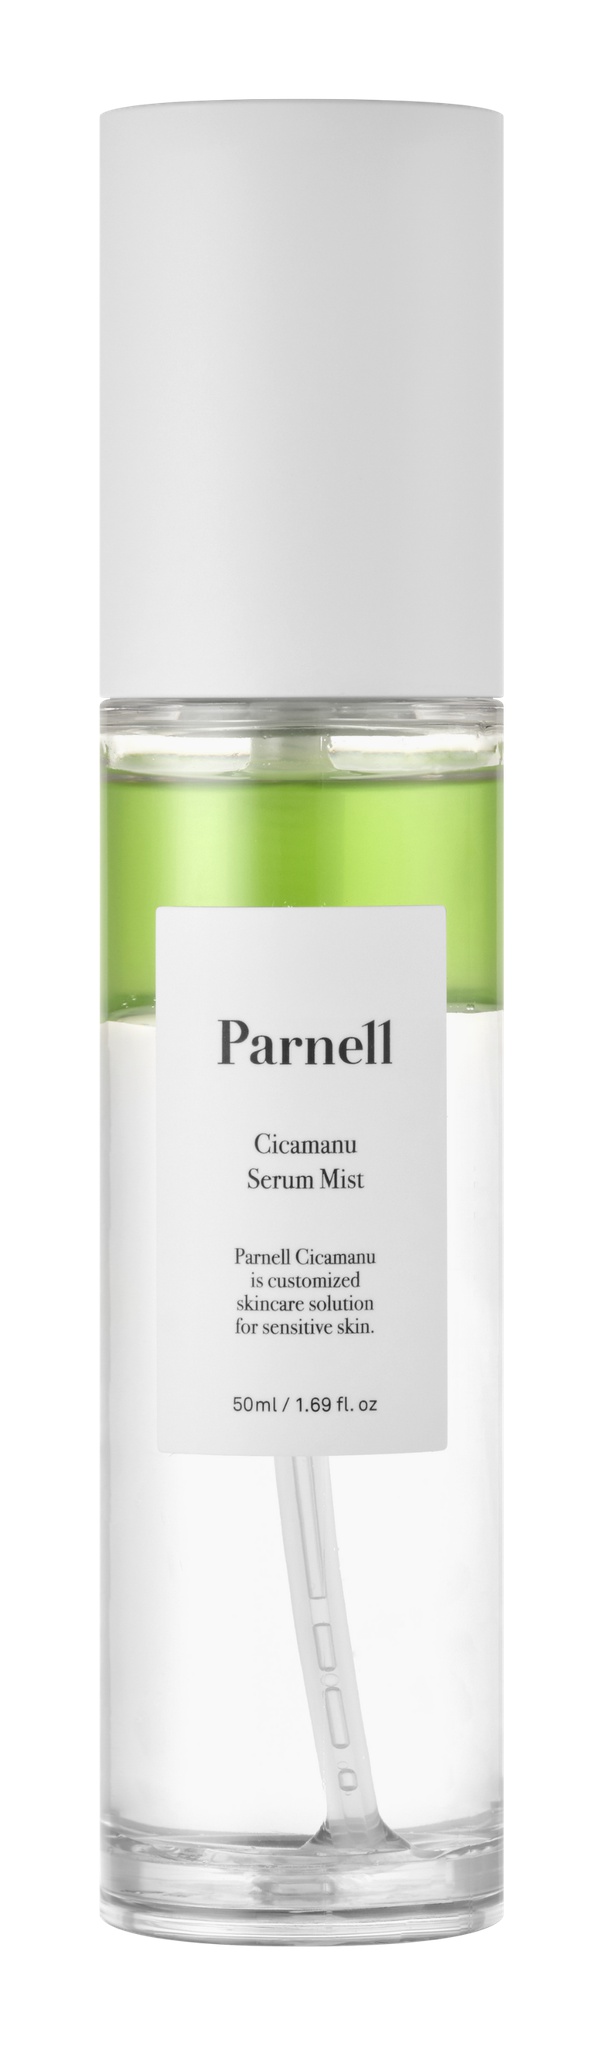 Parnell Cicamanu Serum Mist